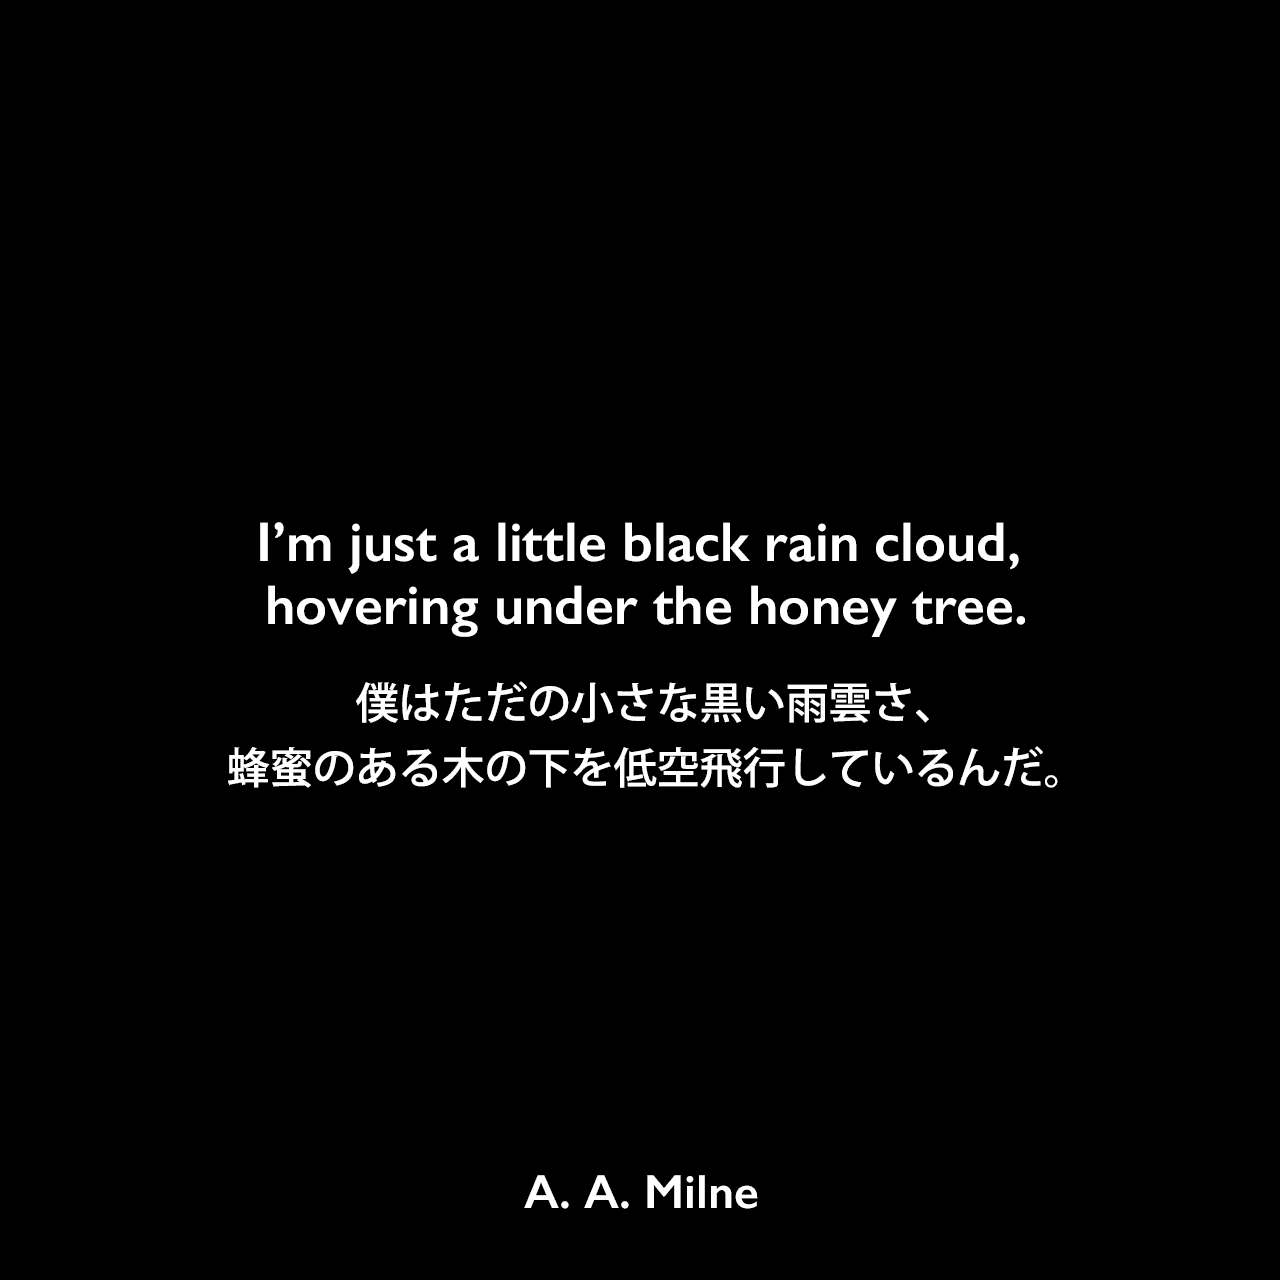 I’m just a little black rain cloud, hovering under the honey tree.僕はただの小さな黒い雨雲さ、蜂蜜のある木の下を低空飛行しているんだ。A. A. Milne